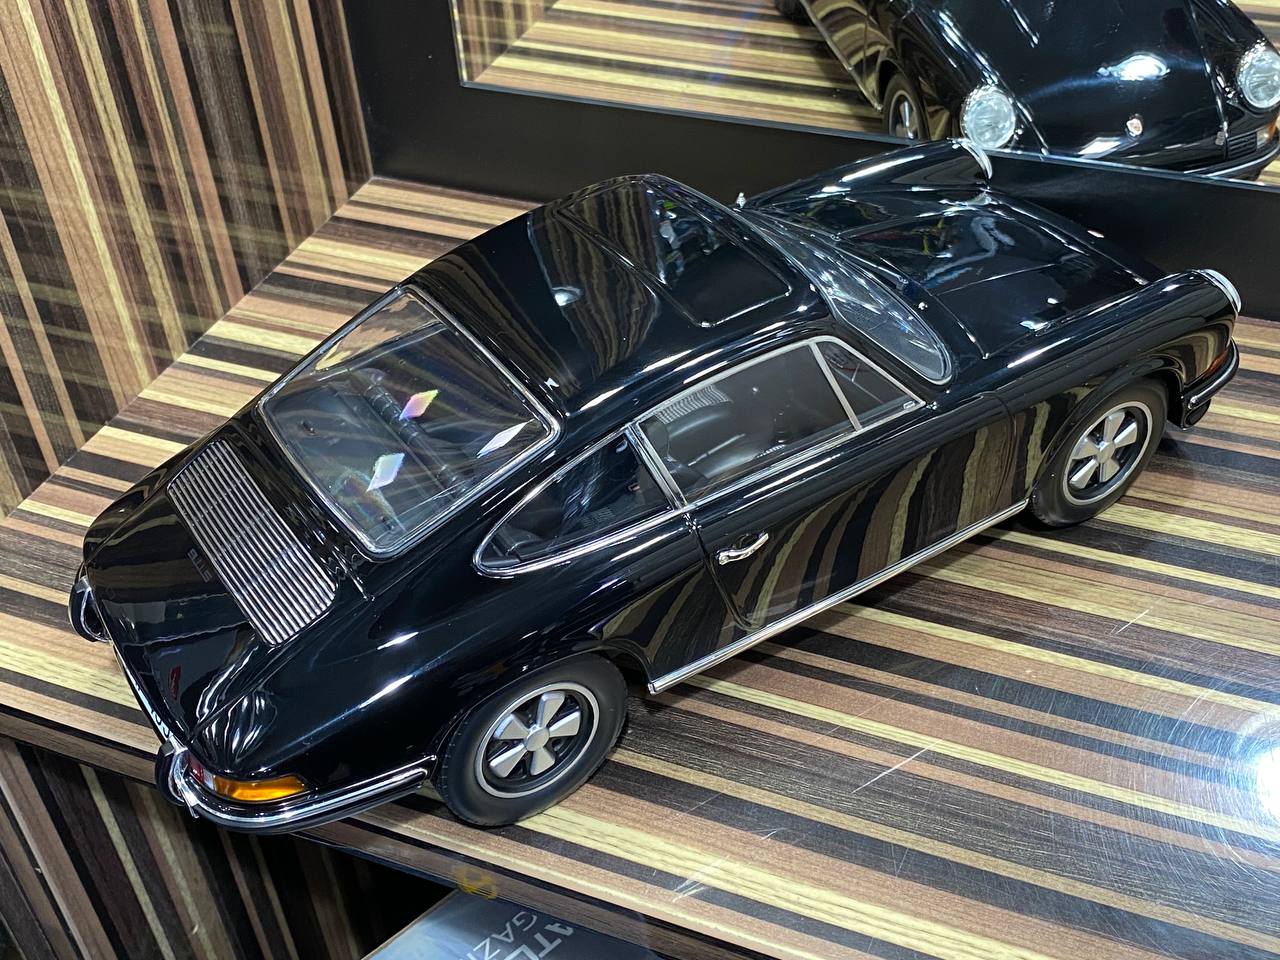 1/18 Diecast Porsche 911 S 1972 Black Norev Scale Model Car|Sold in Dturman.com Dubai UAE.